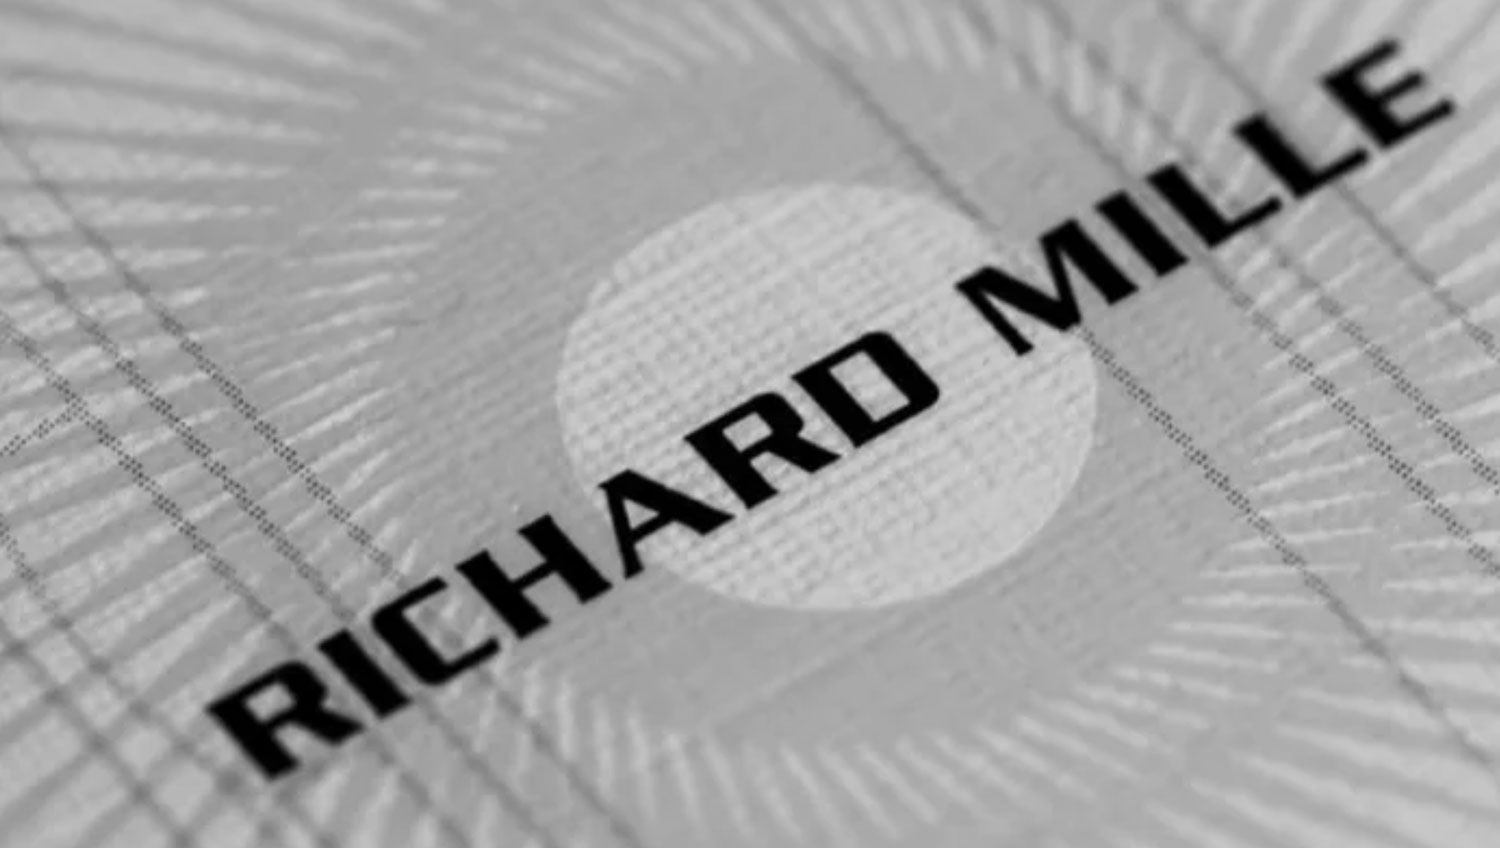 Richard Mille RM-037 Rose Gold Carbon Factory Gem Set Watch RM-037